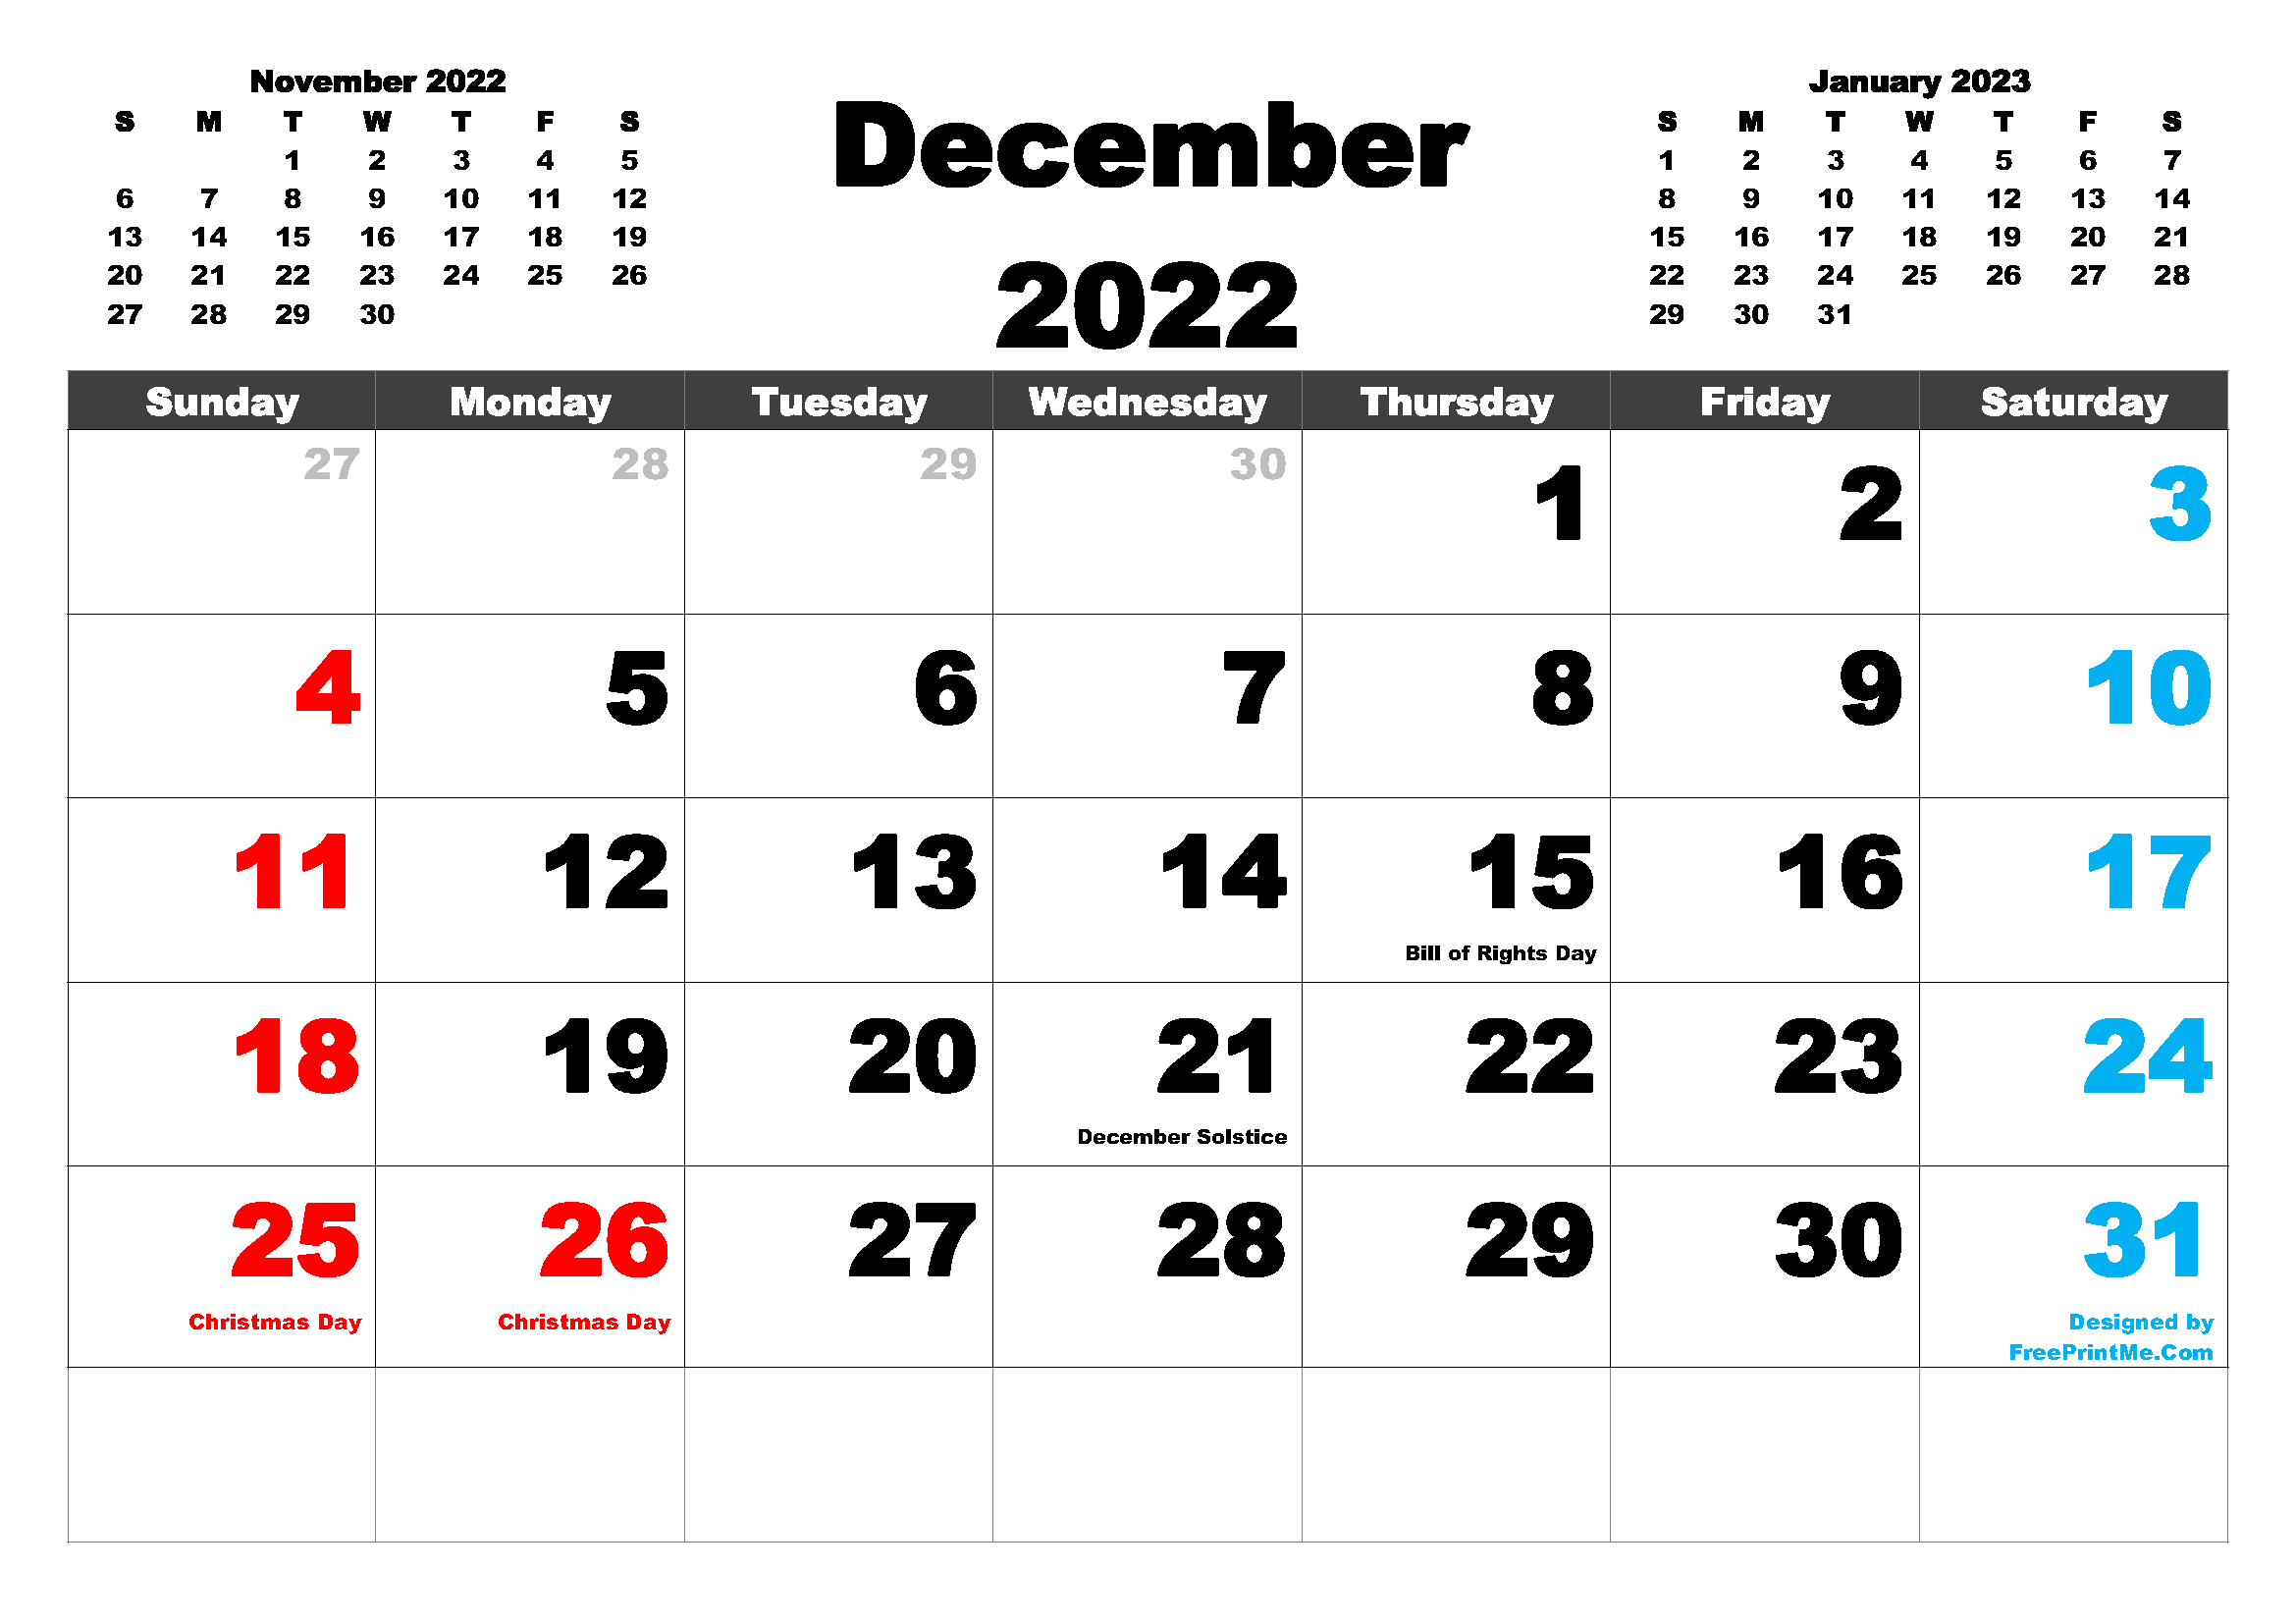 Free Printable December 2022 Calendar Free Printable December 2022 Calendar Pdf, Png Image